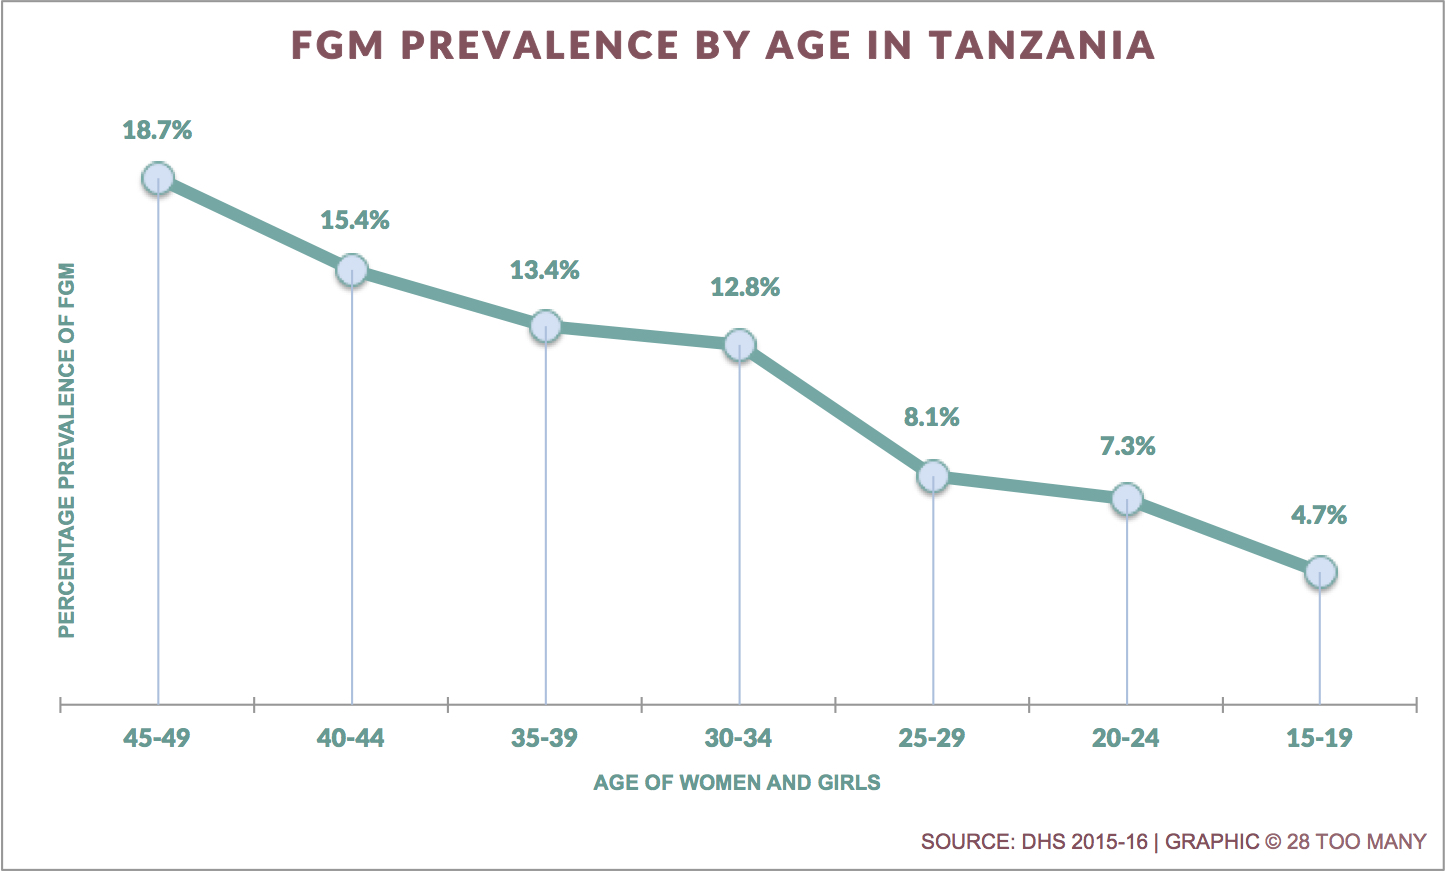 Trends in FGM Prevalence